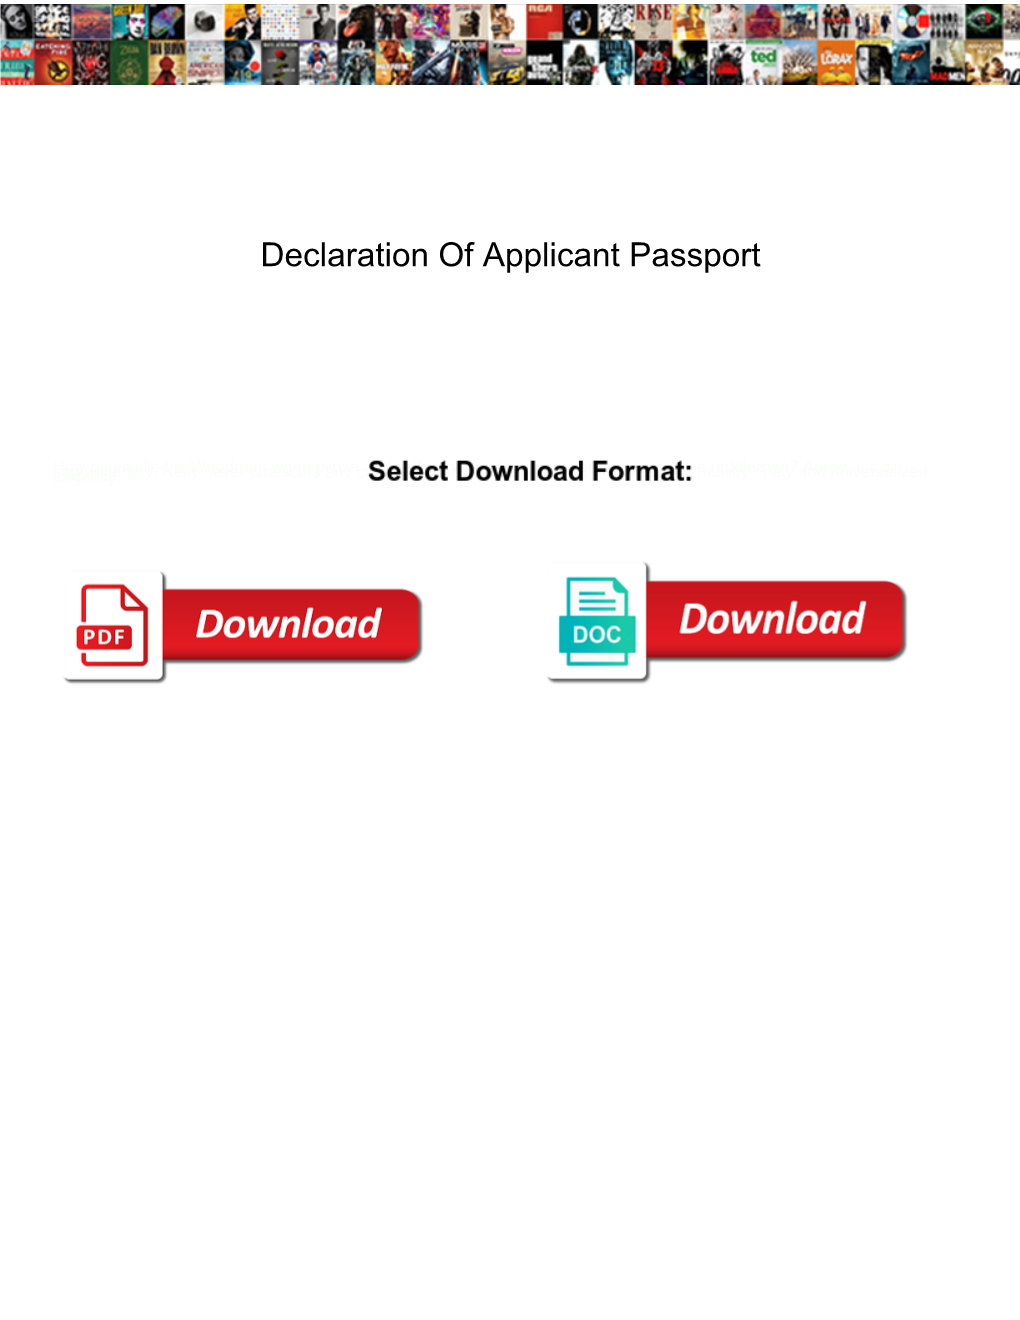 Declaration of Applicant Passport